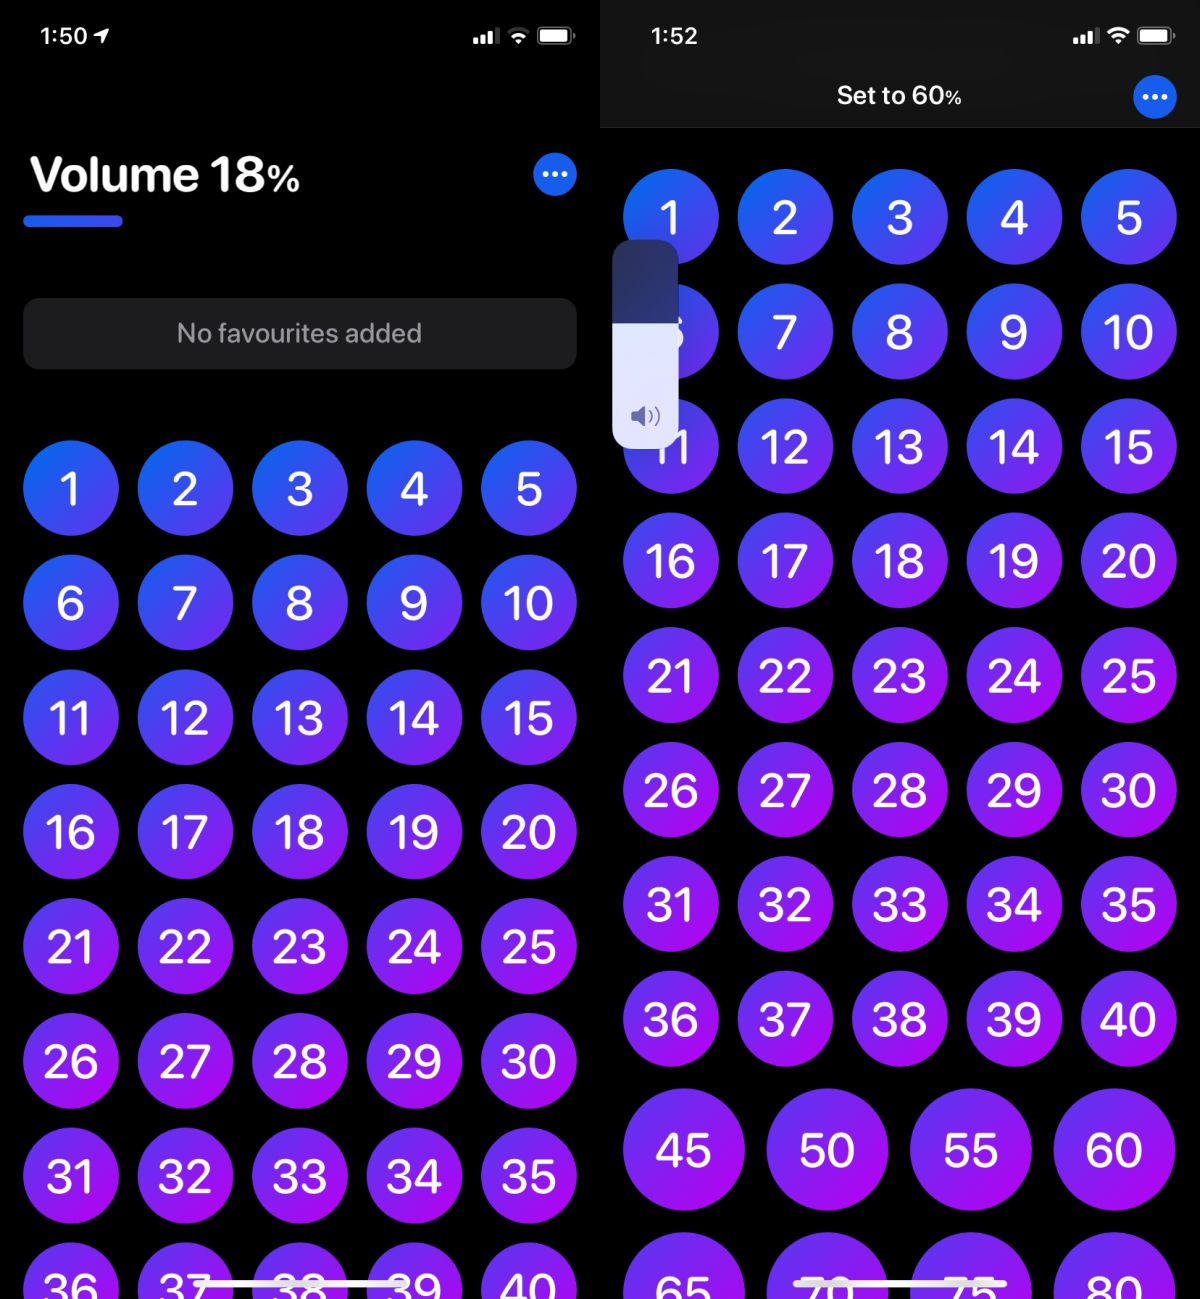 Namaak vriendelijk dik How to get precise volume controls on iOS